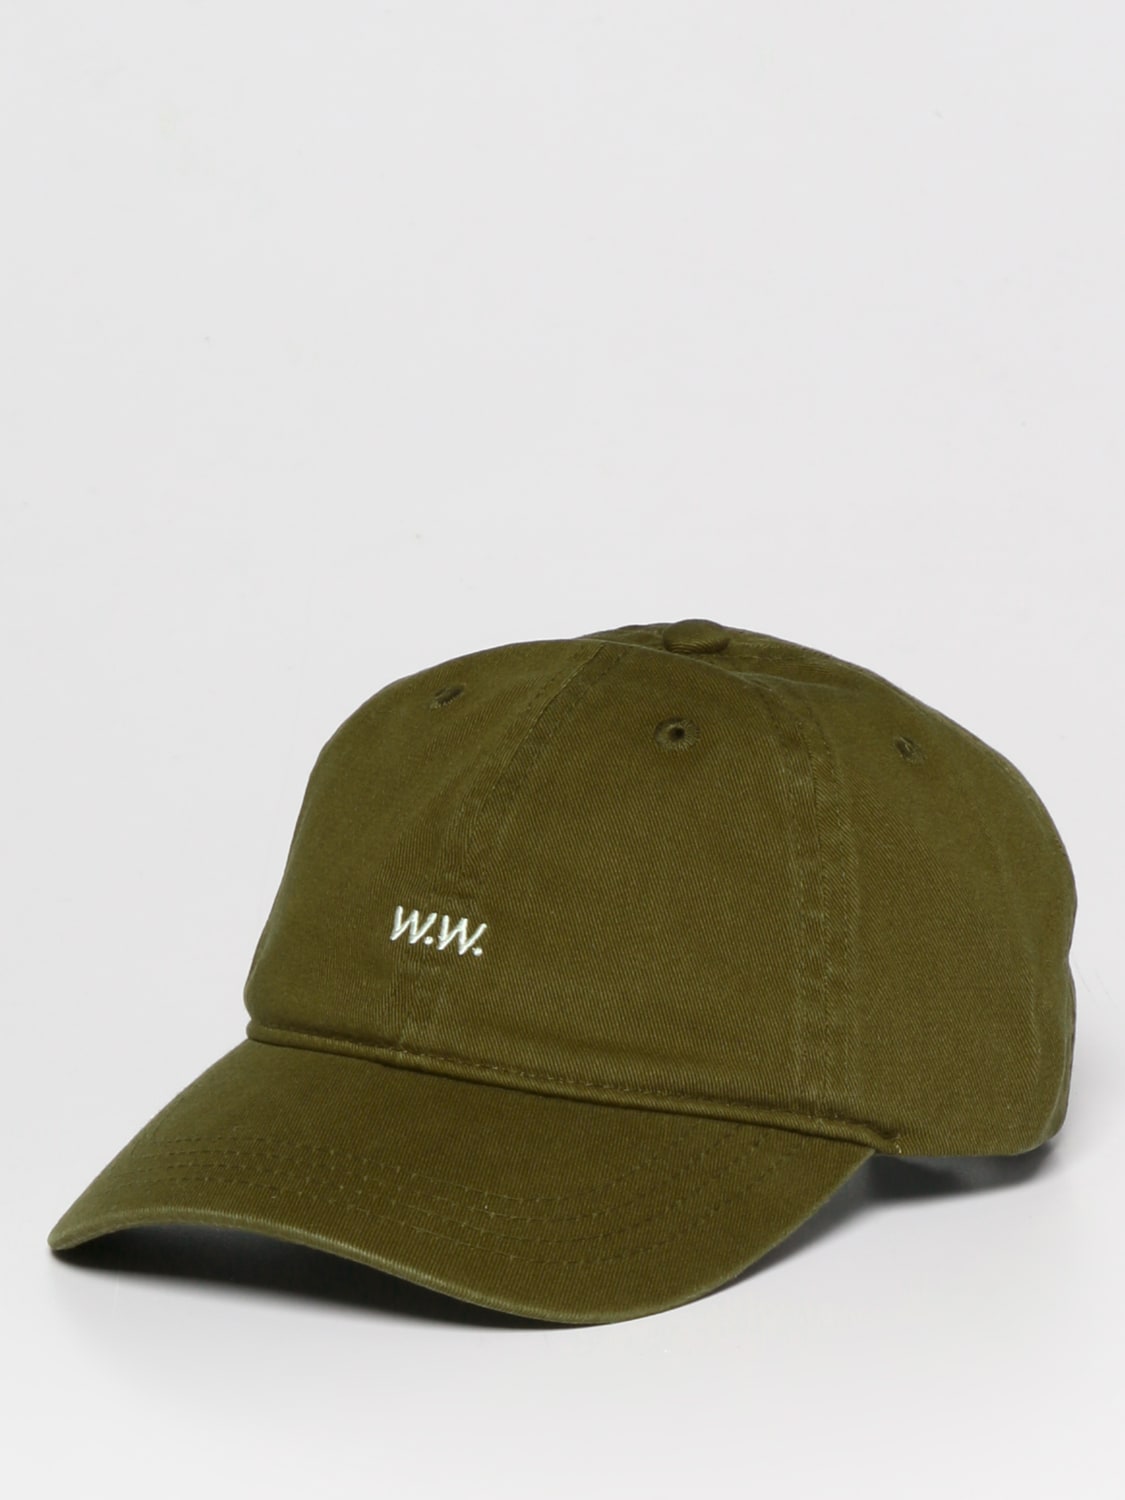 WOOD WOOD: hat for man - Brown | Wood Wood hat 121108047083 online at